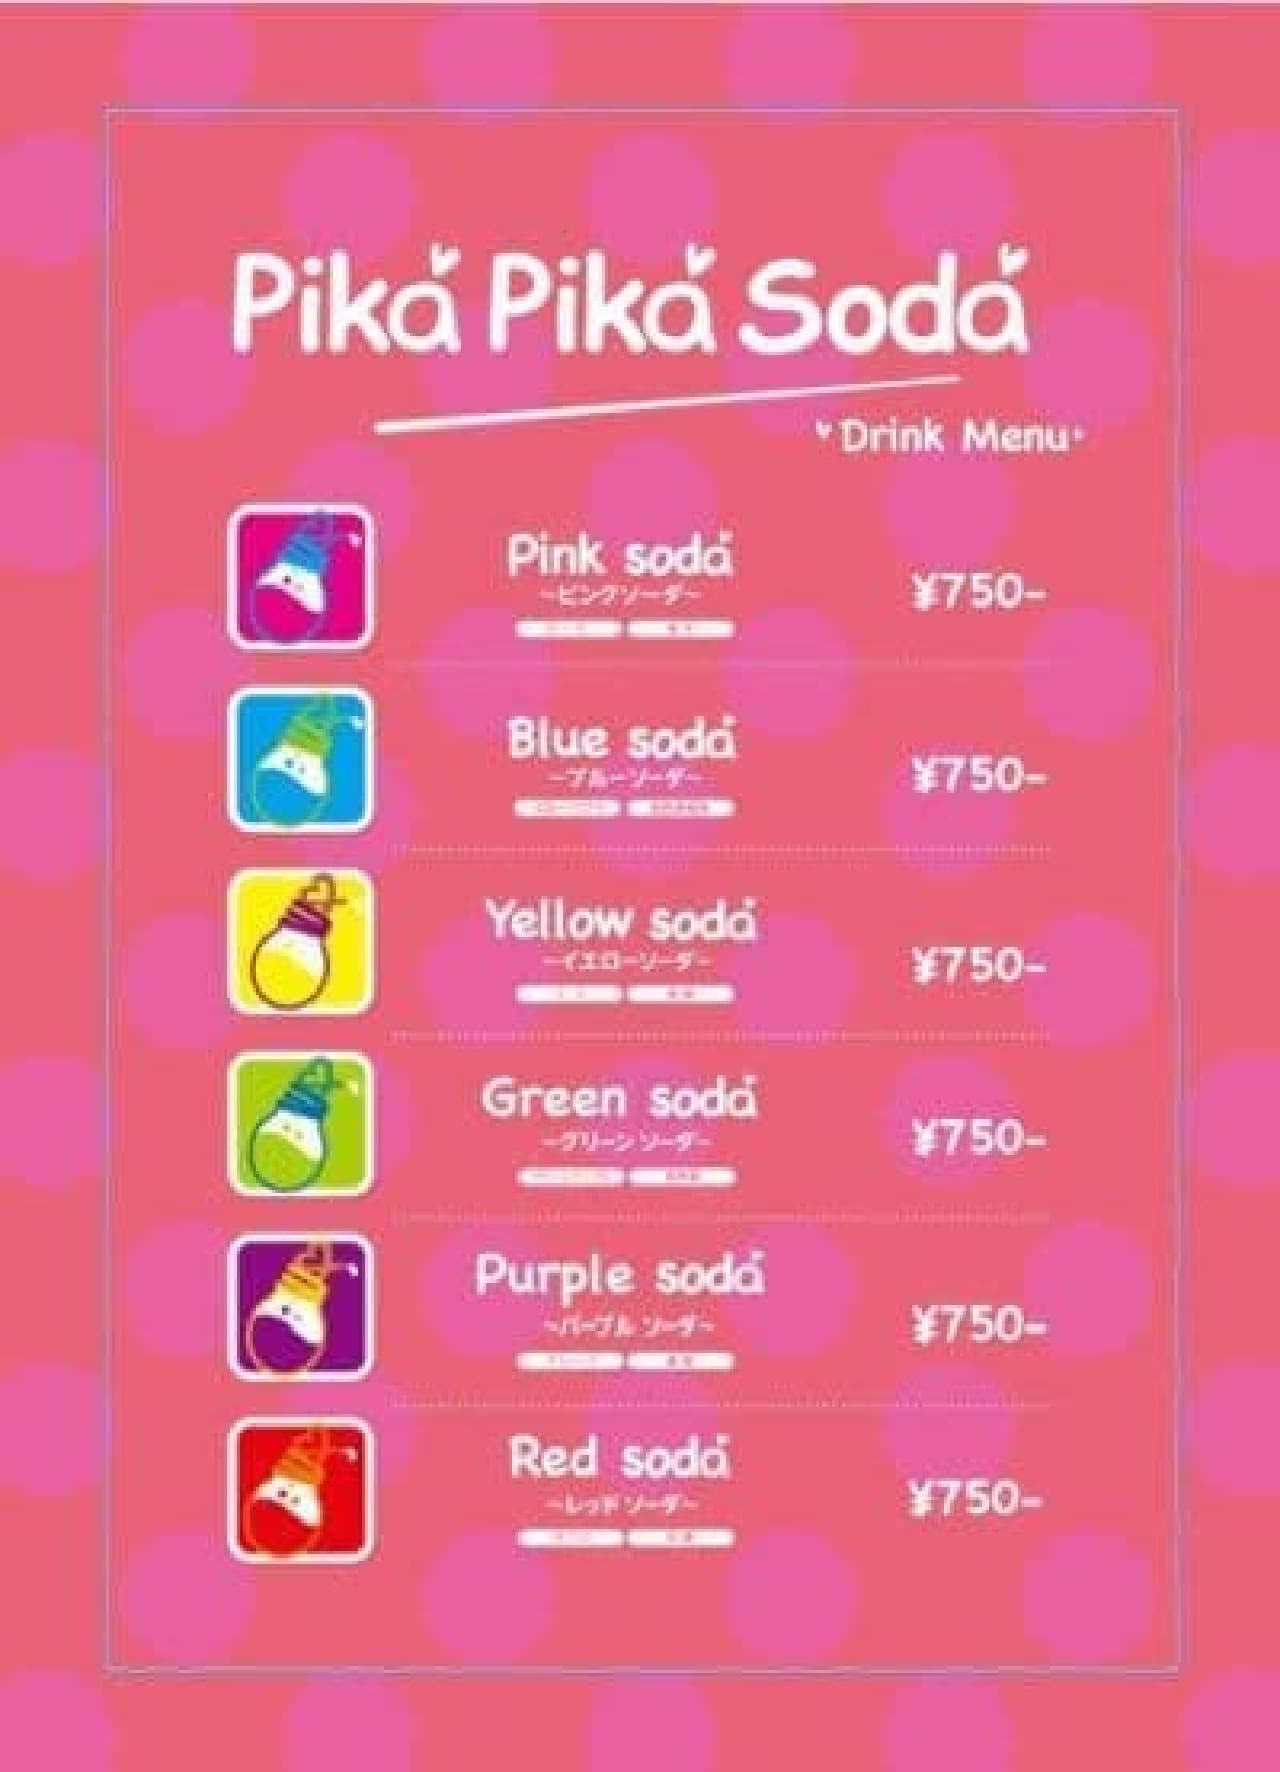 「Pika Pika Soda」は、プラスチック製の電球ボトルに入ったソーダ「電球型ソーダ」を販売するお店